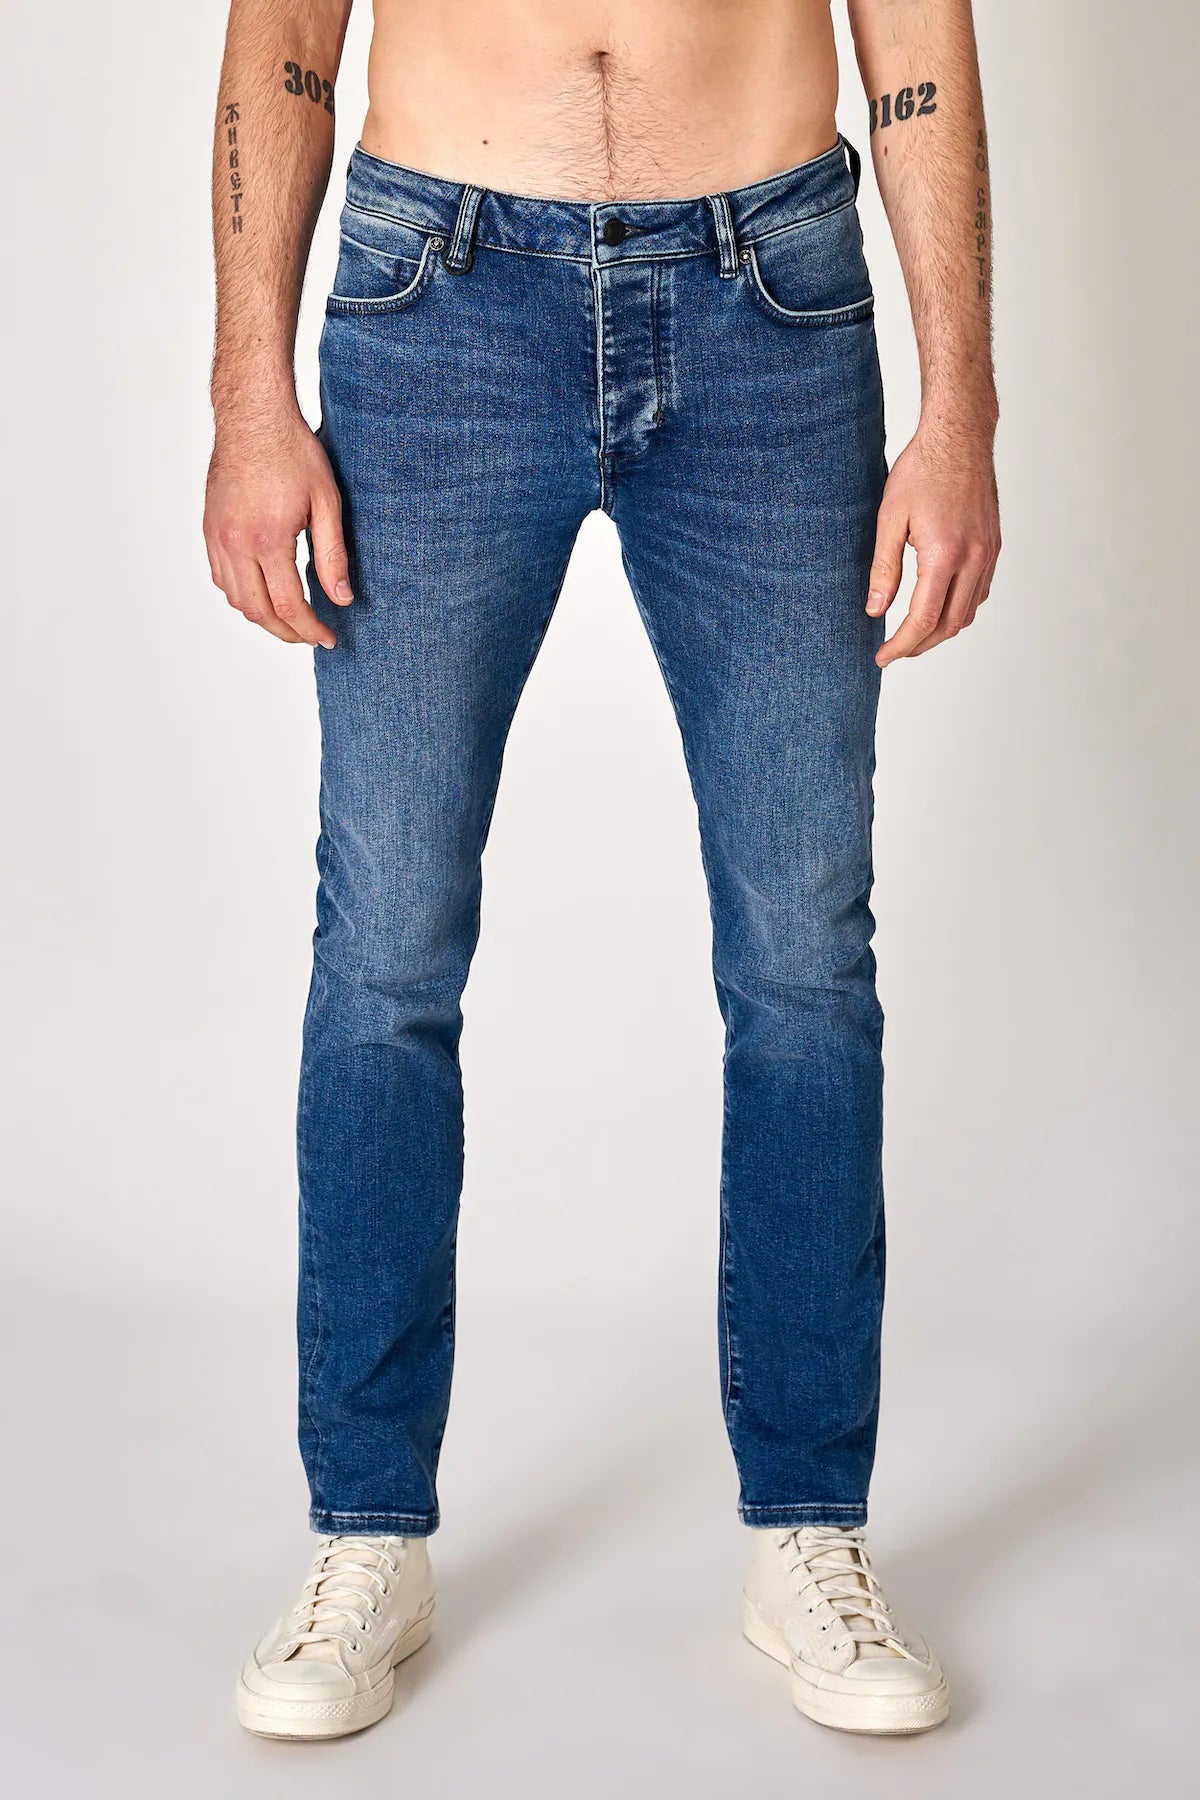 Iggy skinny jeans artful